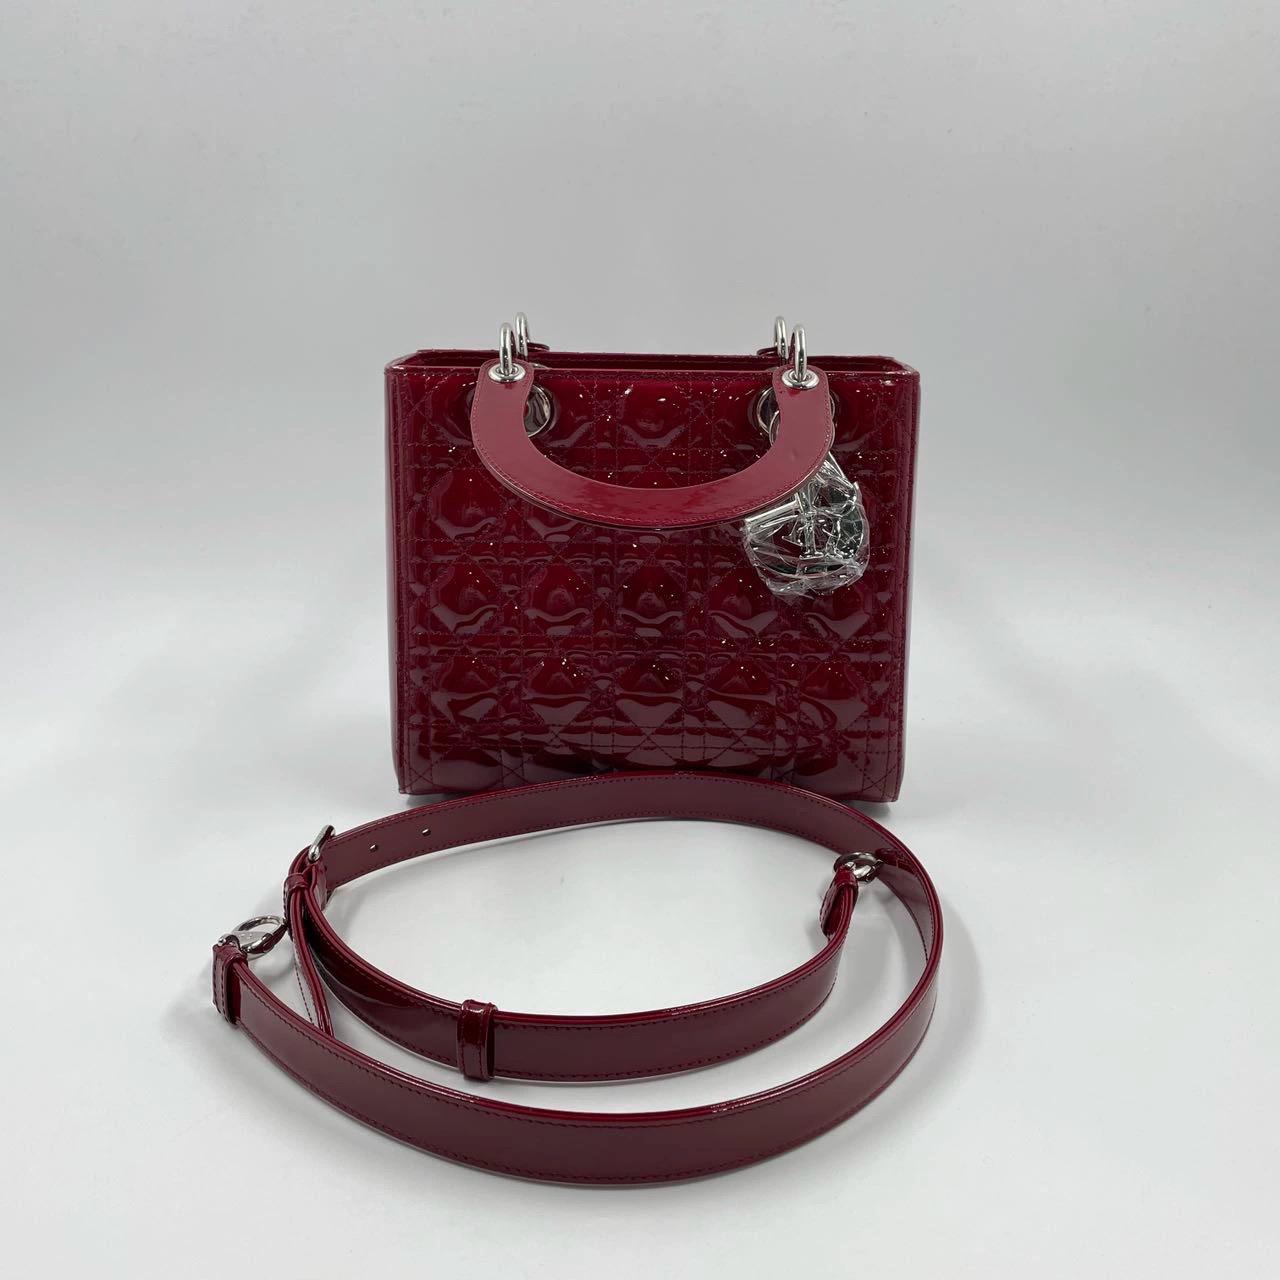 Lady Dior 2017 Medium Burgundy Patent Leather Handbag Adjustable Strap For Sale 4